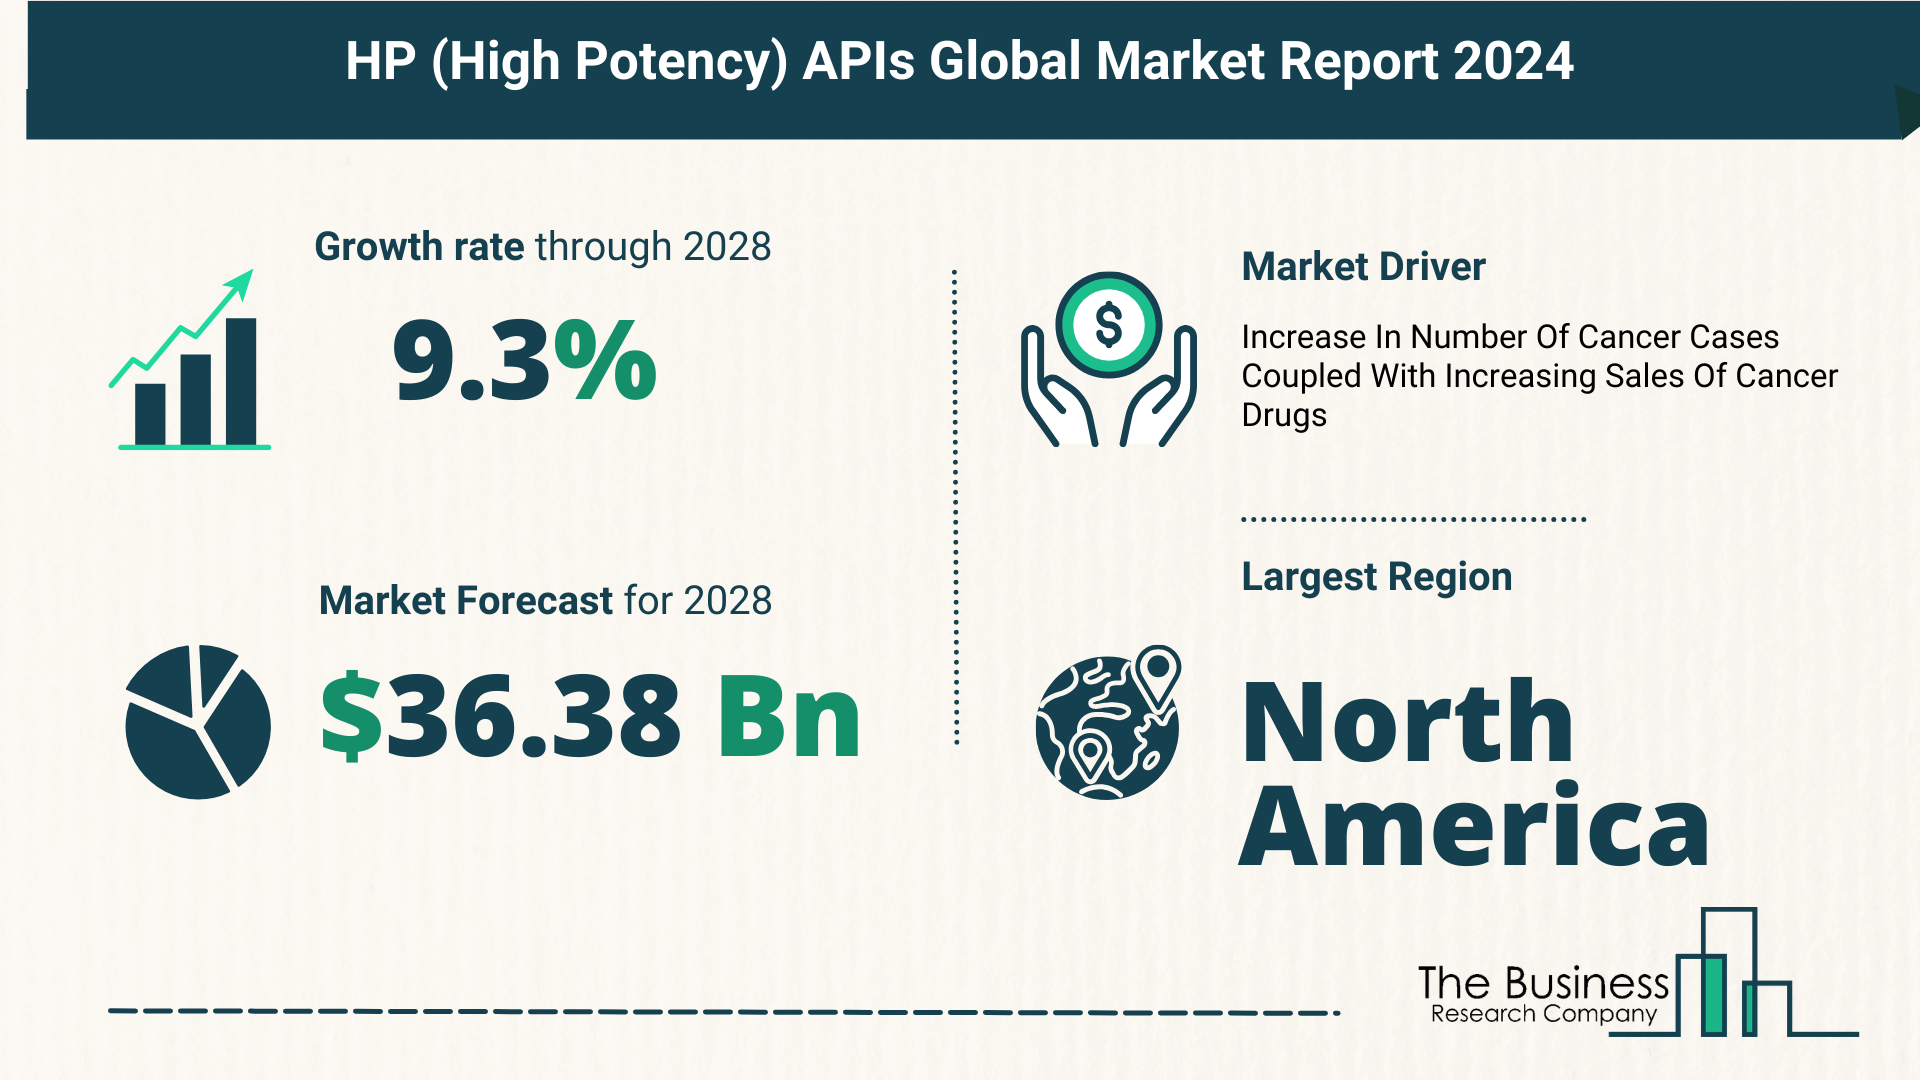 Global HP (High Potency) APIs Market